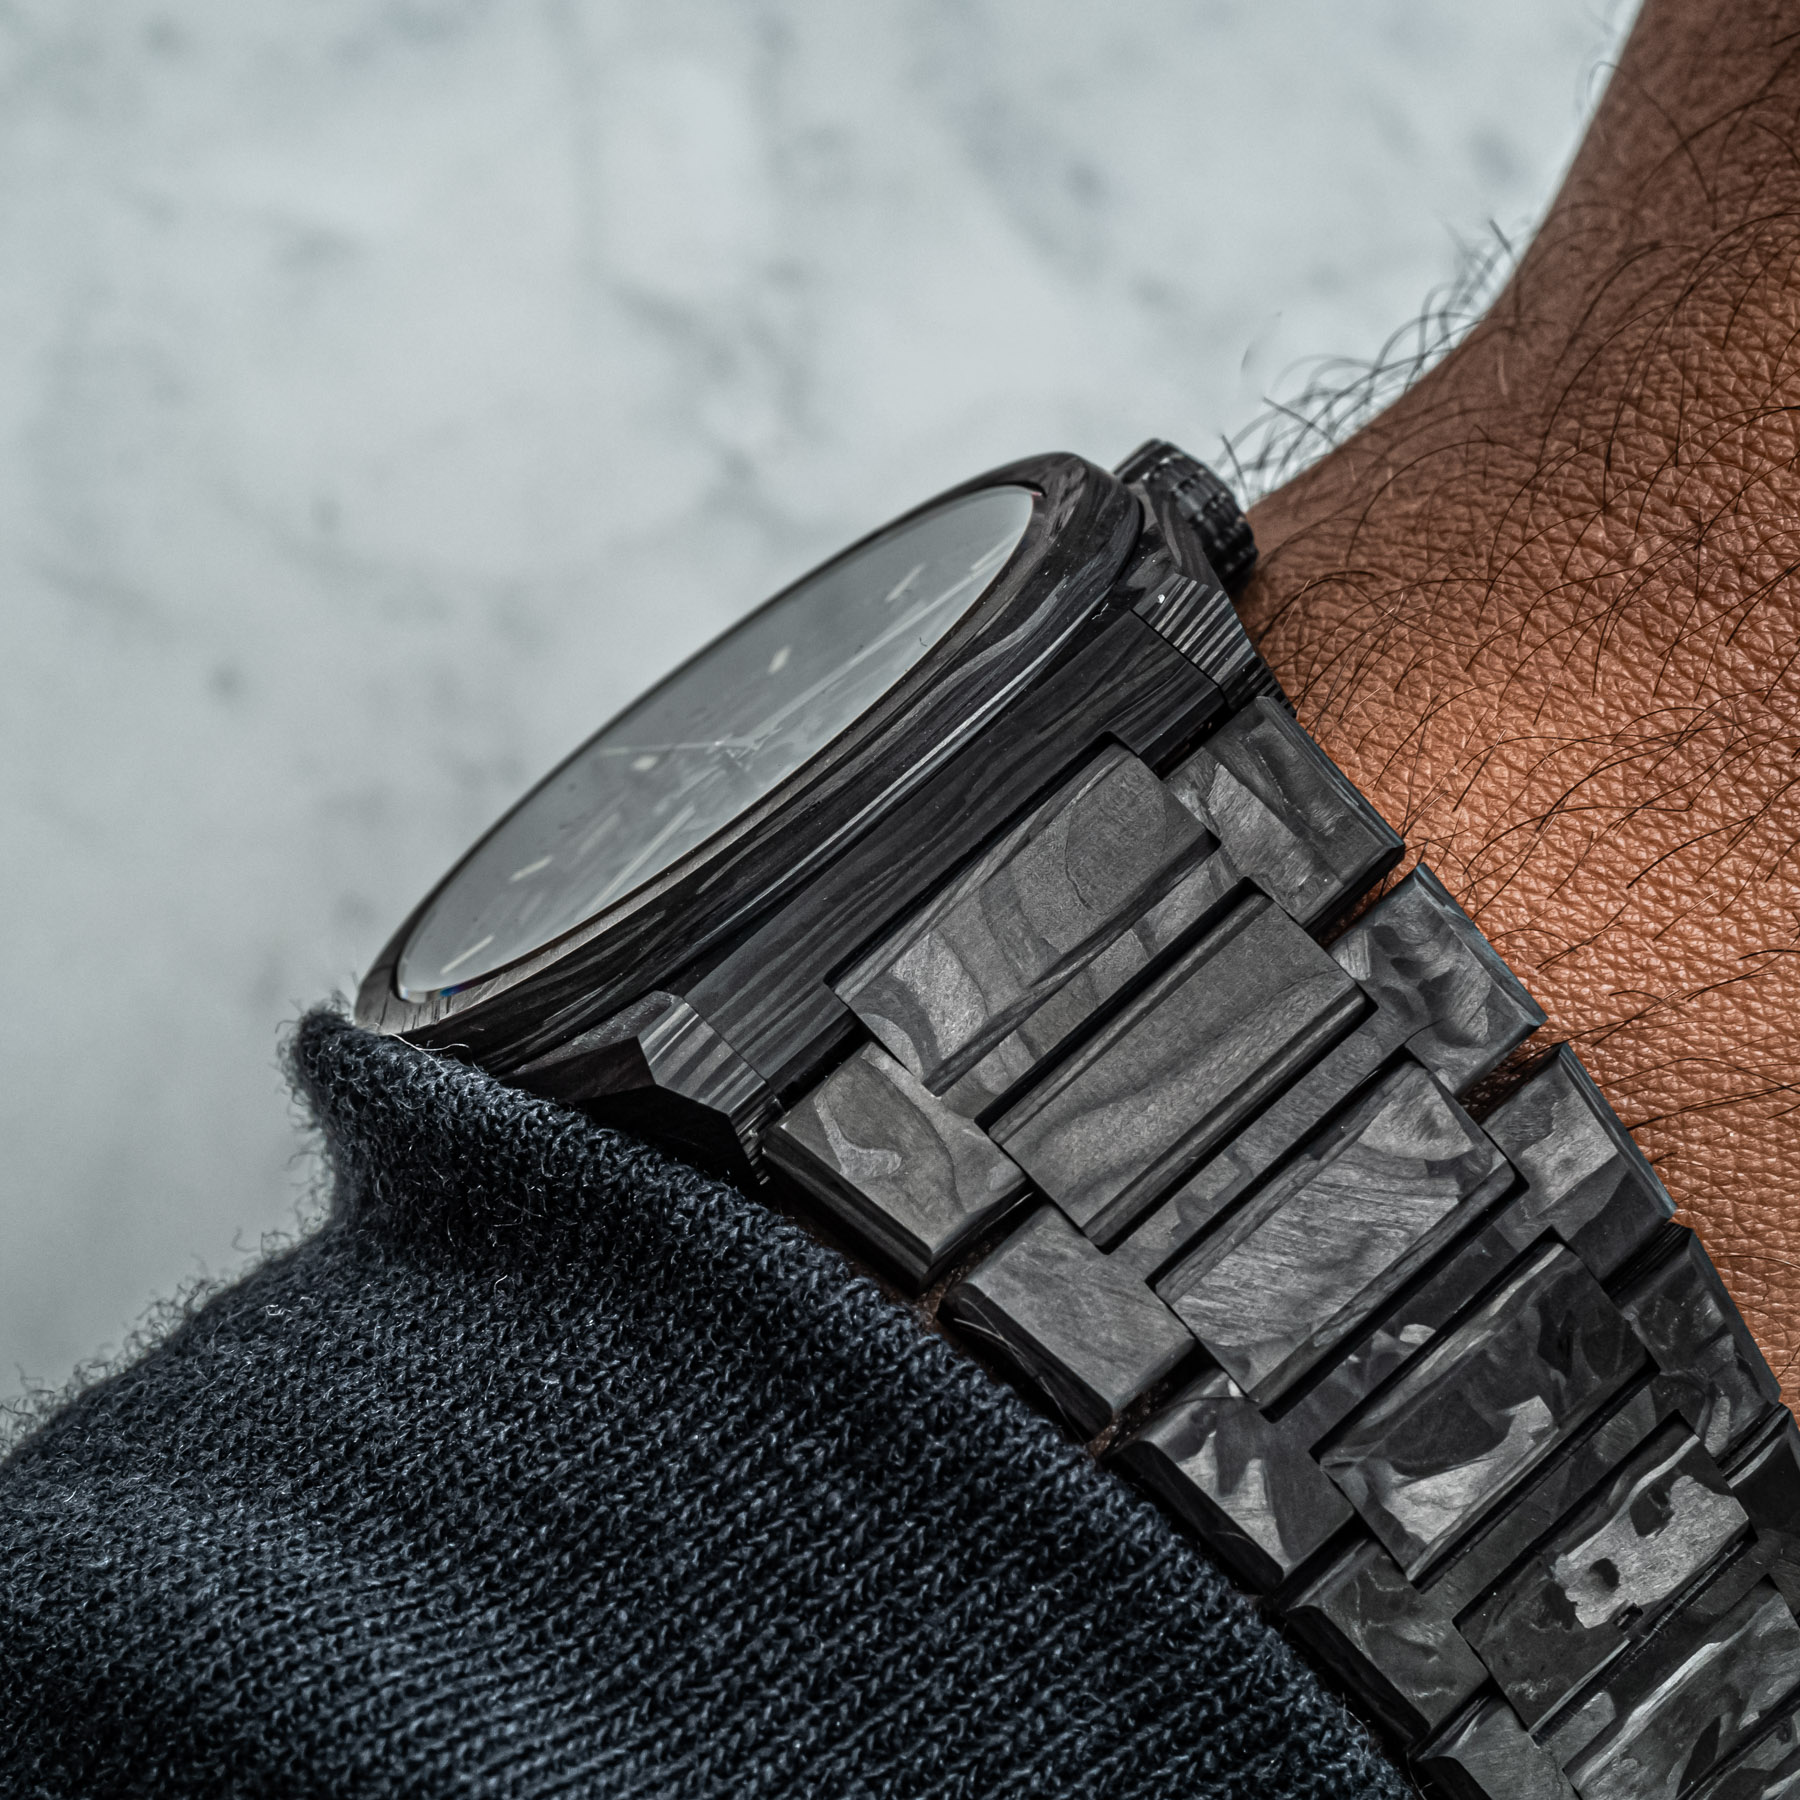 Zenith's Ultra-Light All-Carbon Defy Classic Wristwatch - COOL